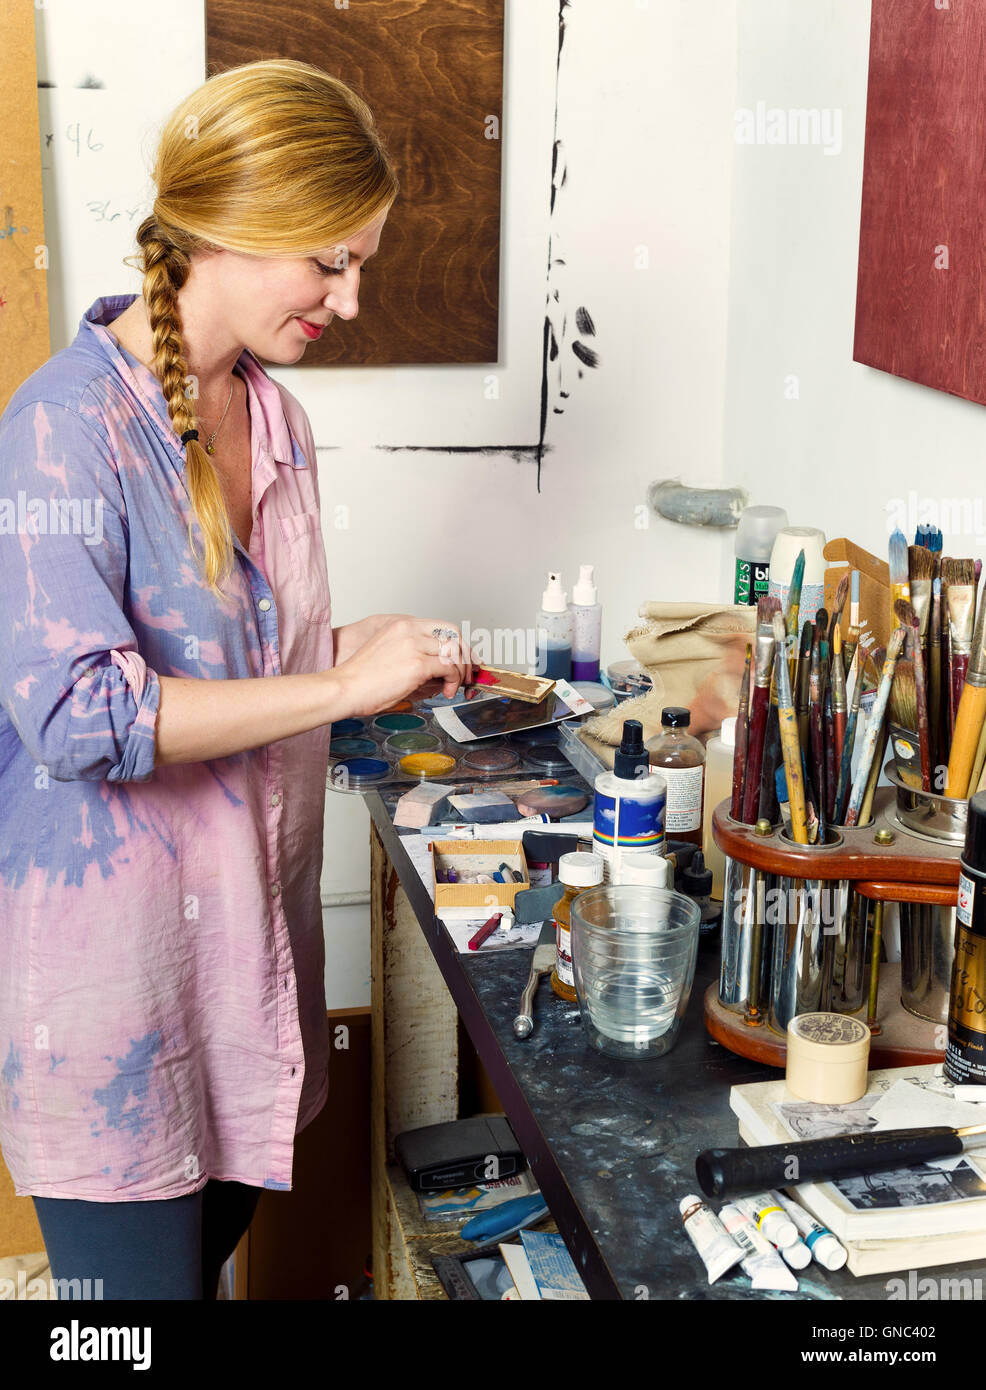 Blonde Woman Mixing Paints in Painter's Studio Stock Photo